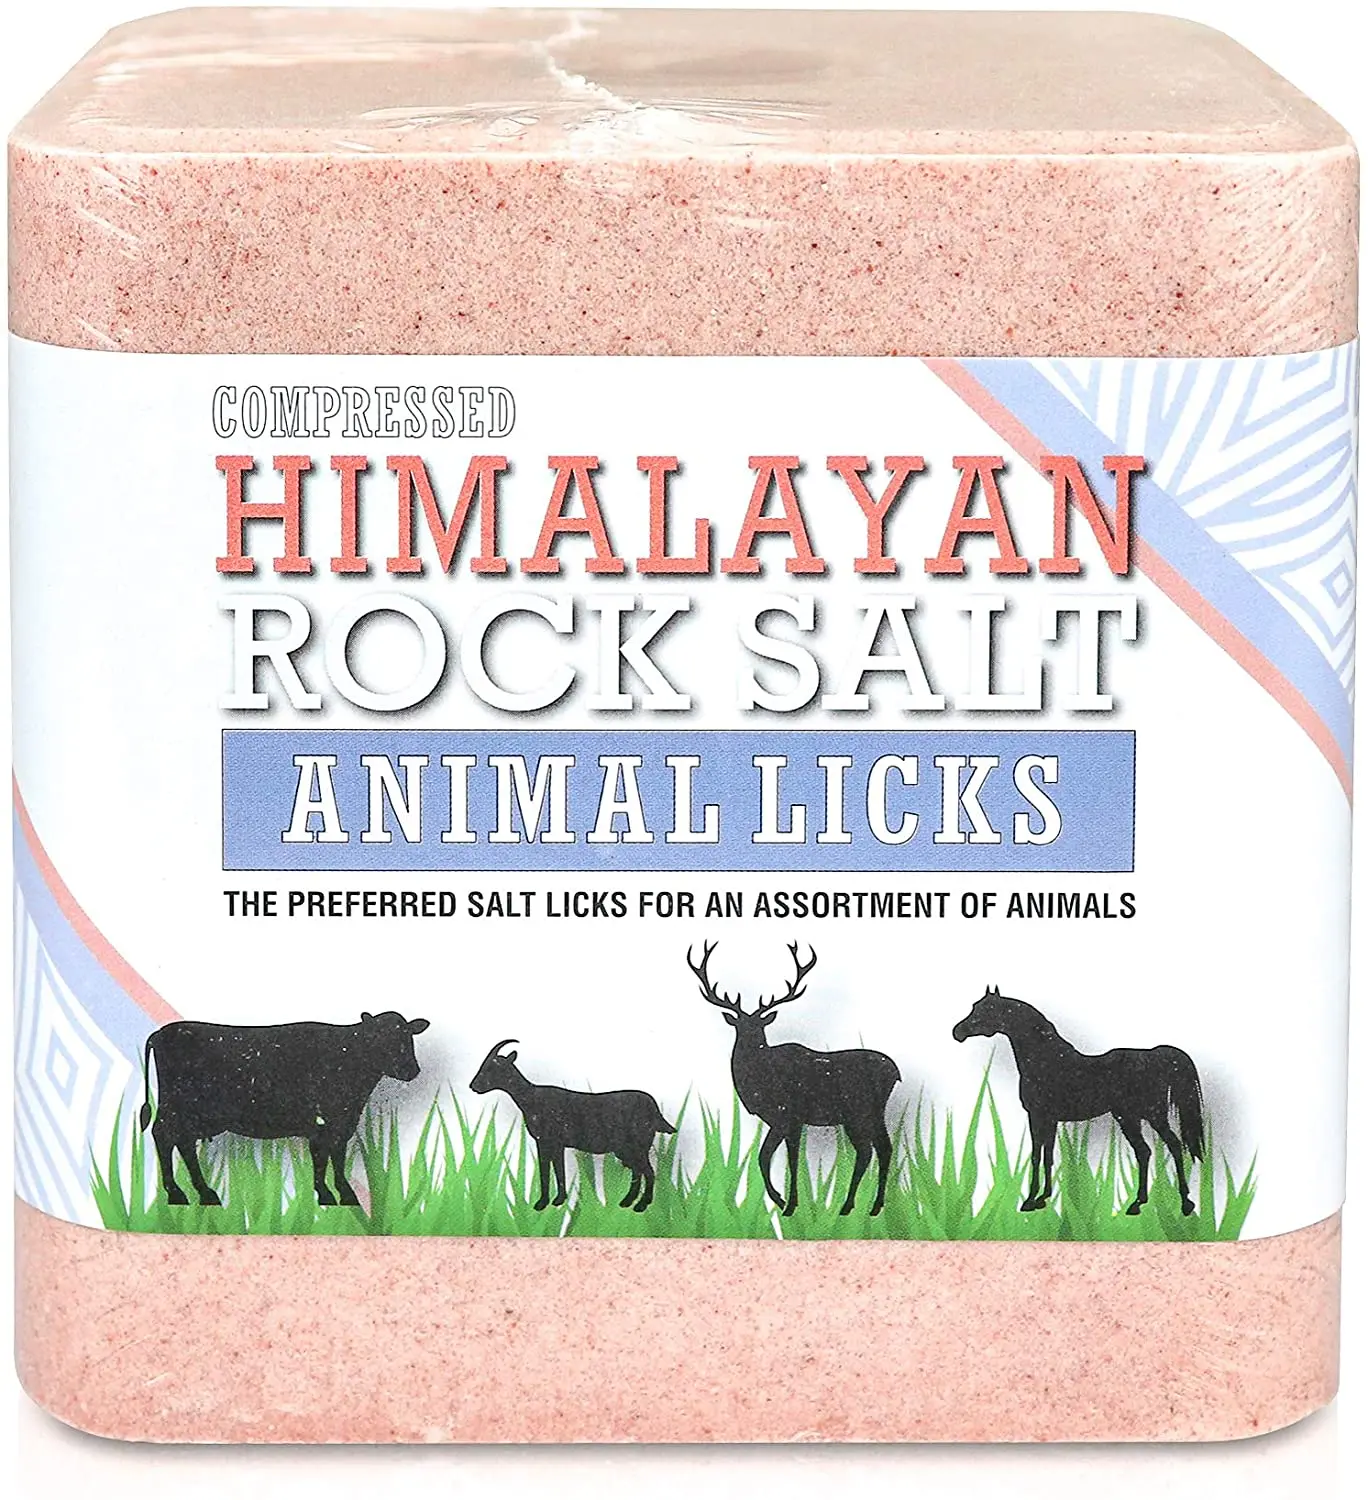 Cattle Animal lick Salt 100% Natural Pure Himalayan Salt compressed Blocks from Pakistan